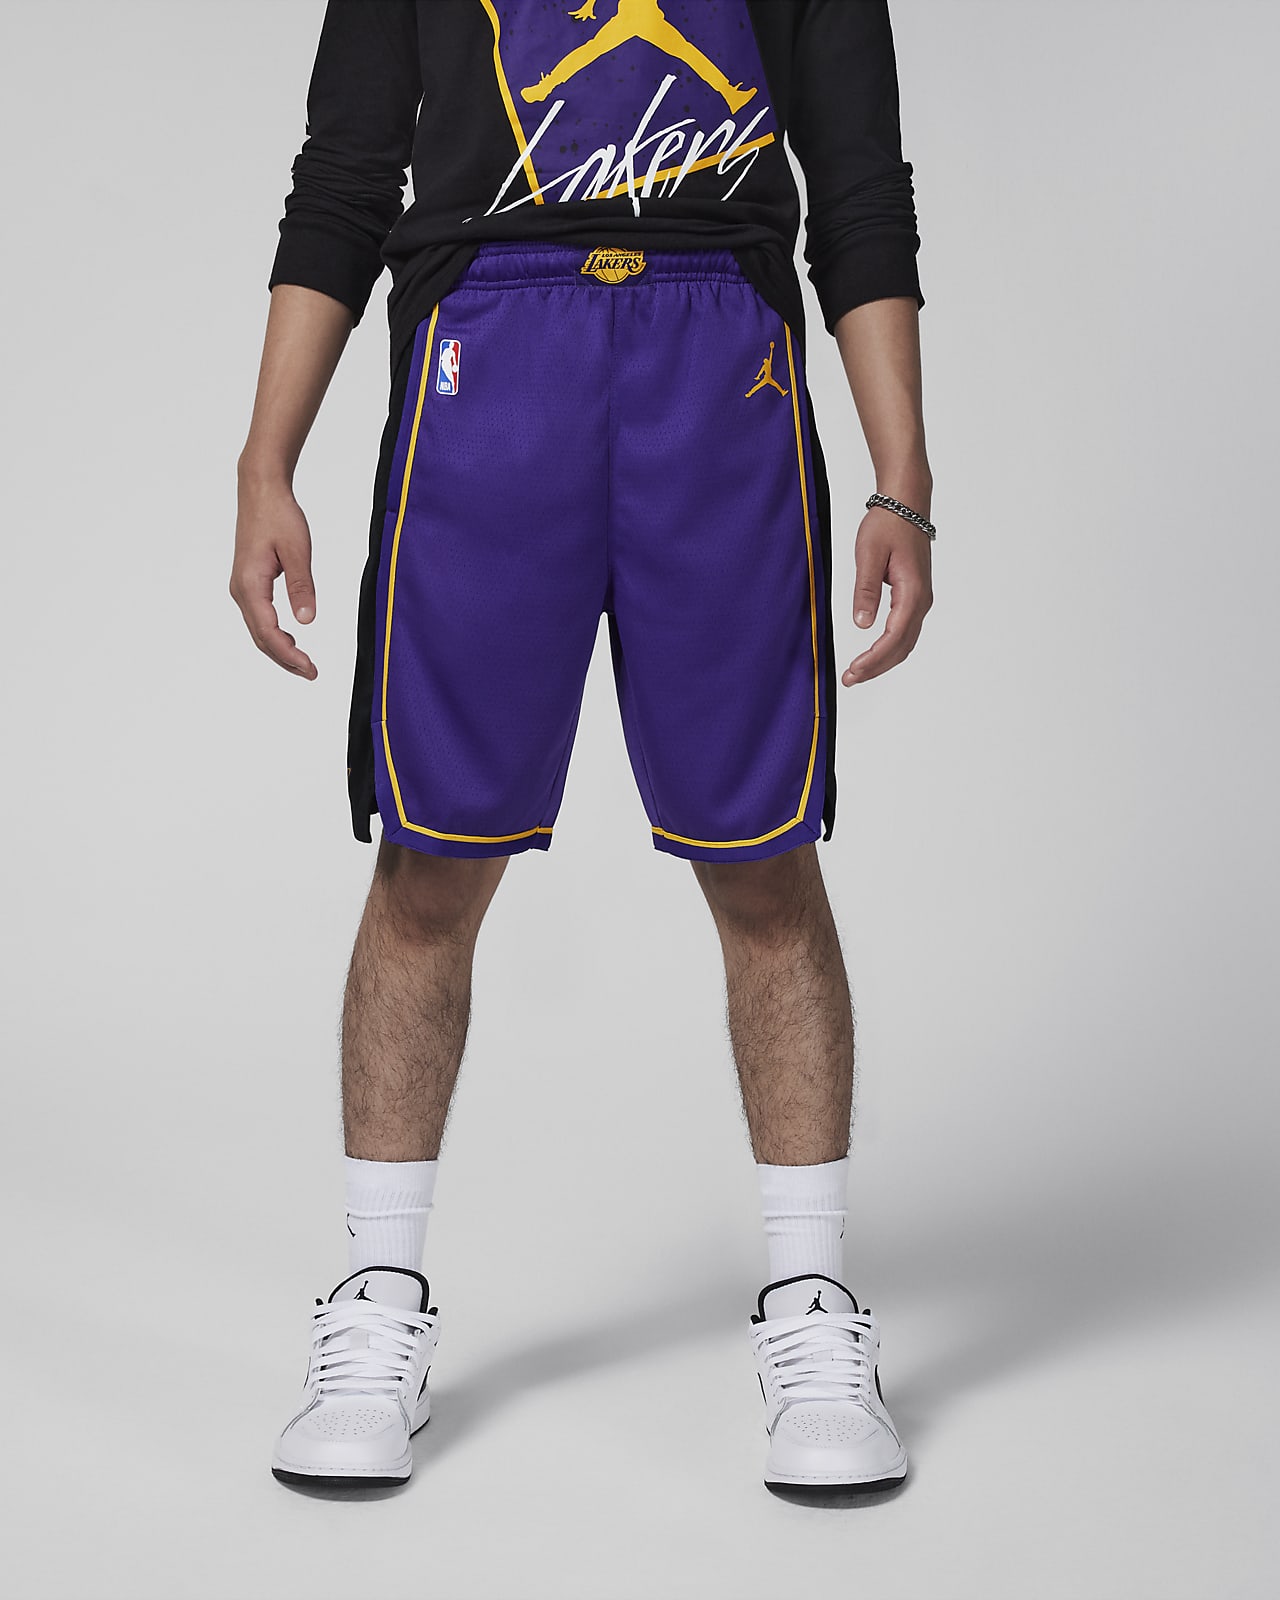 Los Angeles Lakers Statement Edition Jordan NBA Swingman Basketballshorts für ältere Kinder